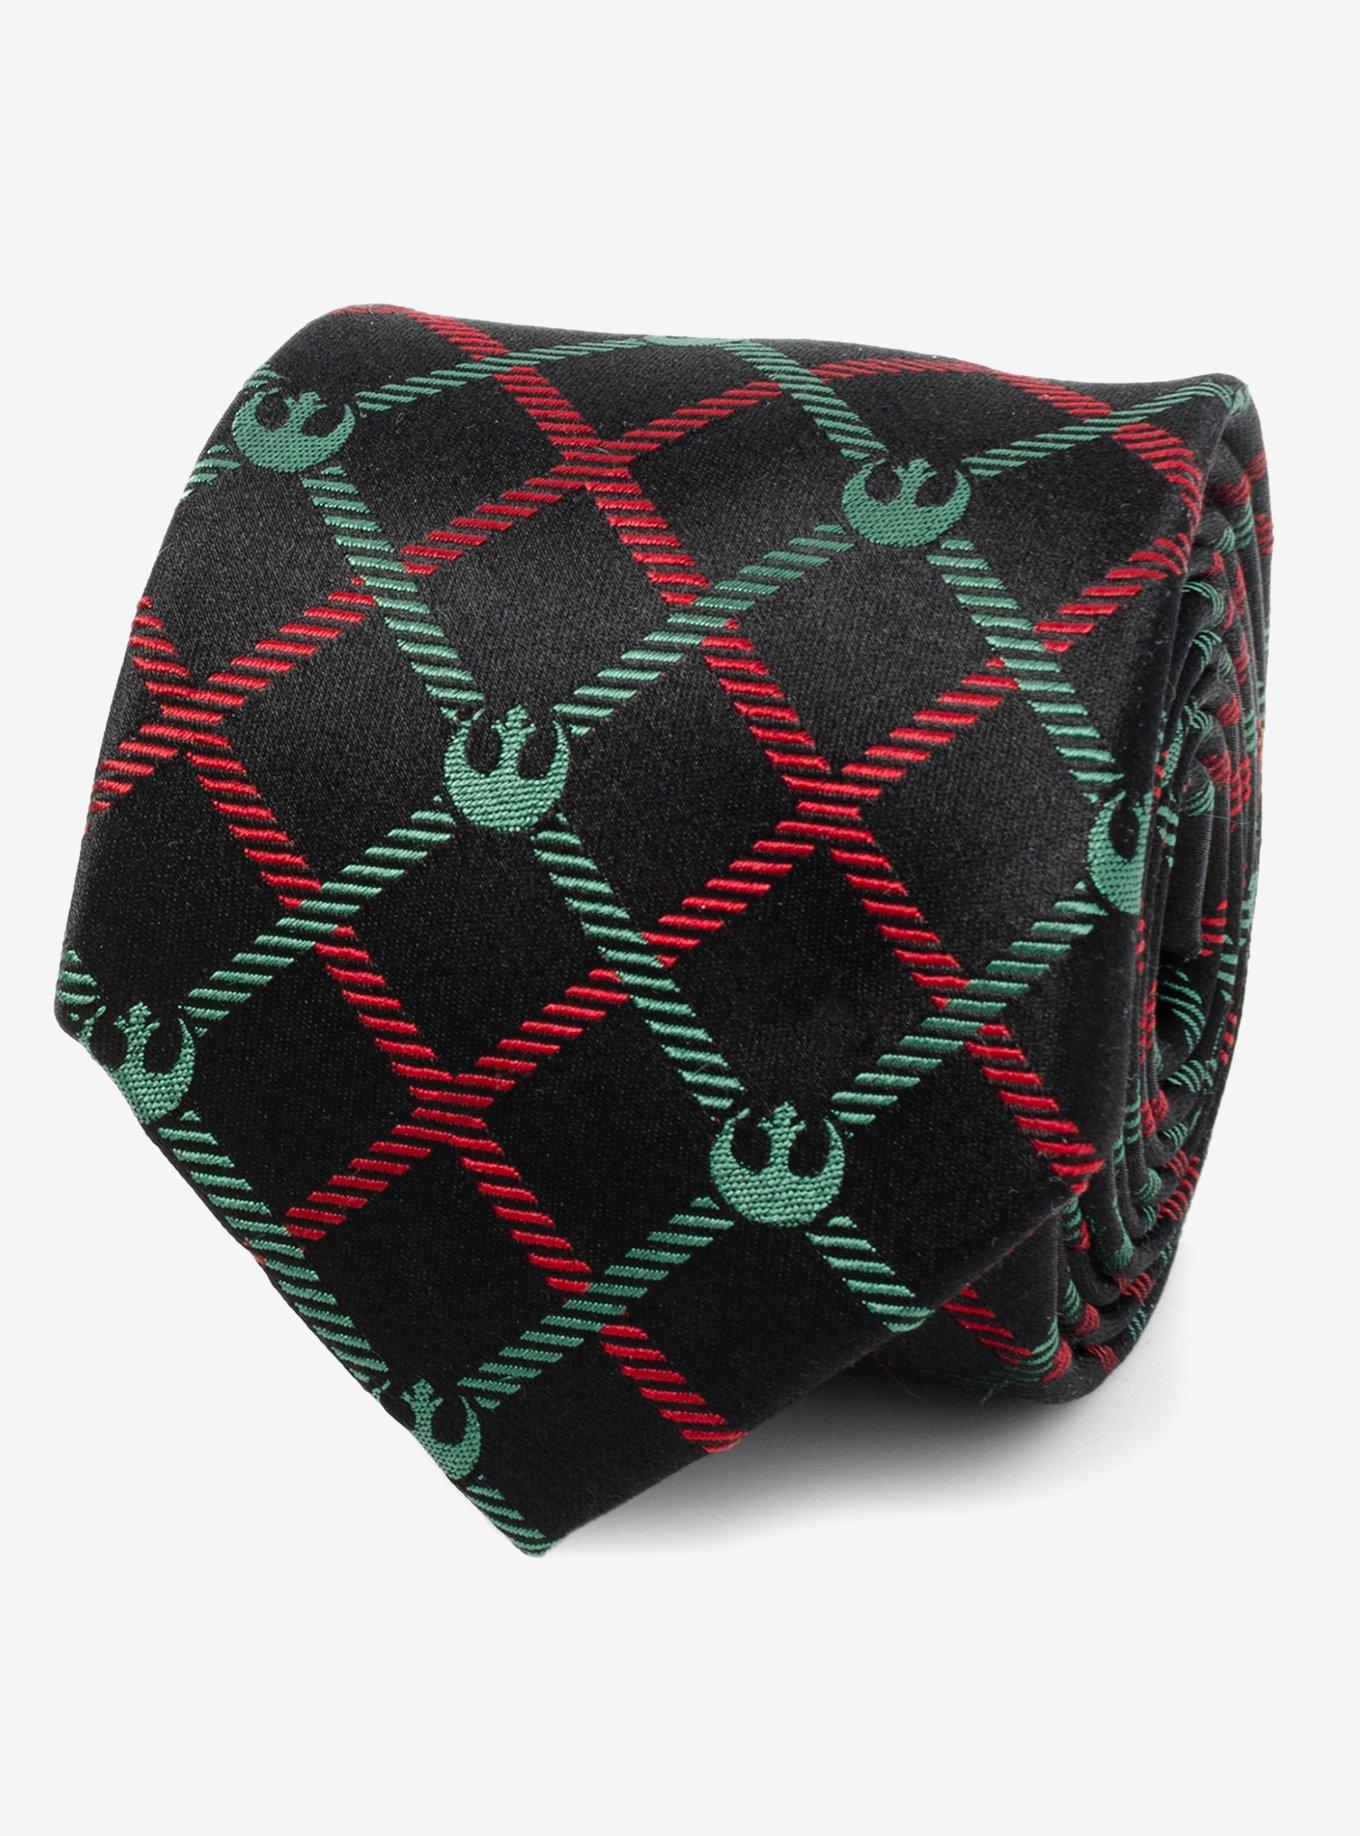 Star Wars Rebel Red Tie Clip Bar Men's Accessories Geek Gift Dress Shirt Tie